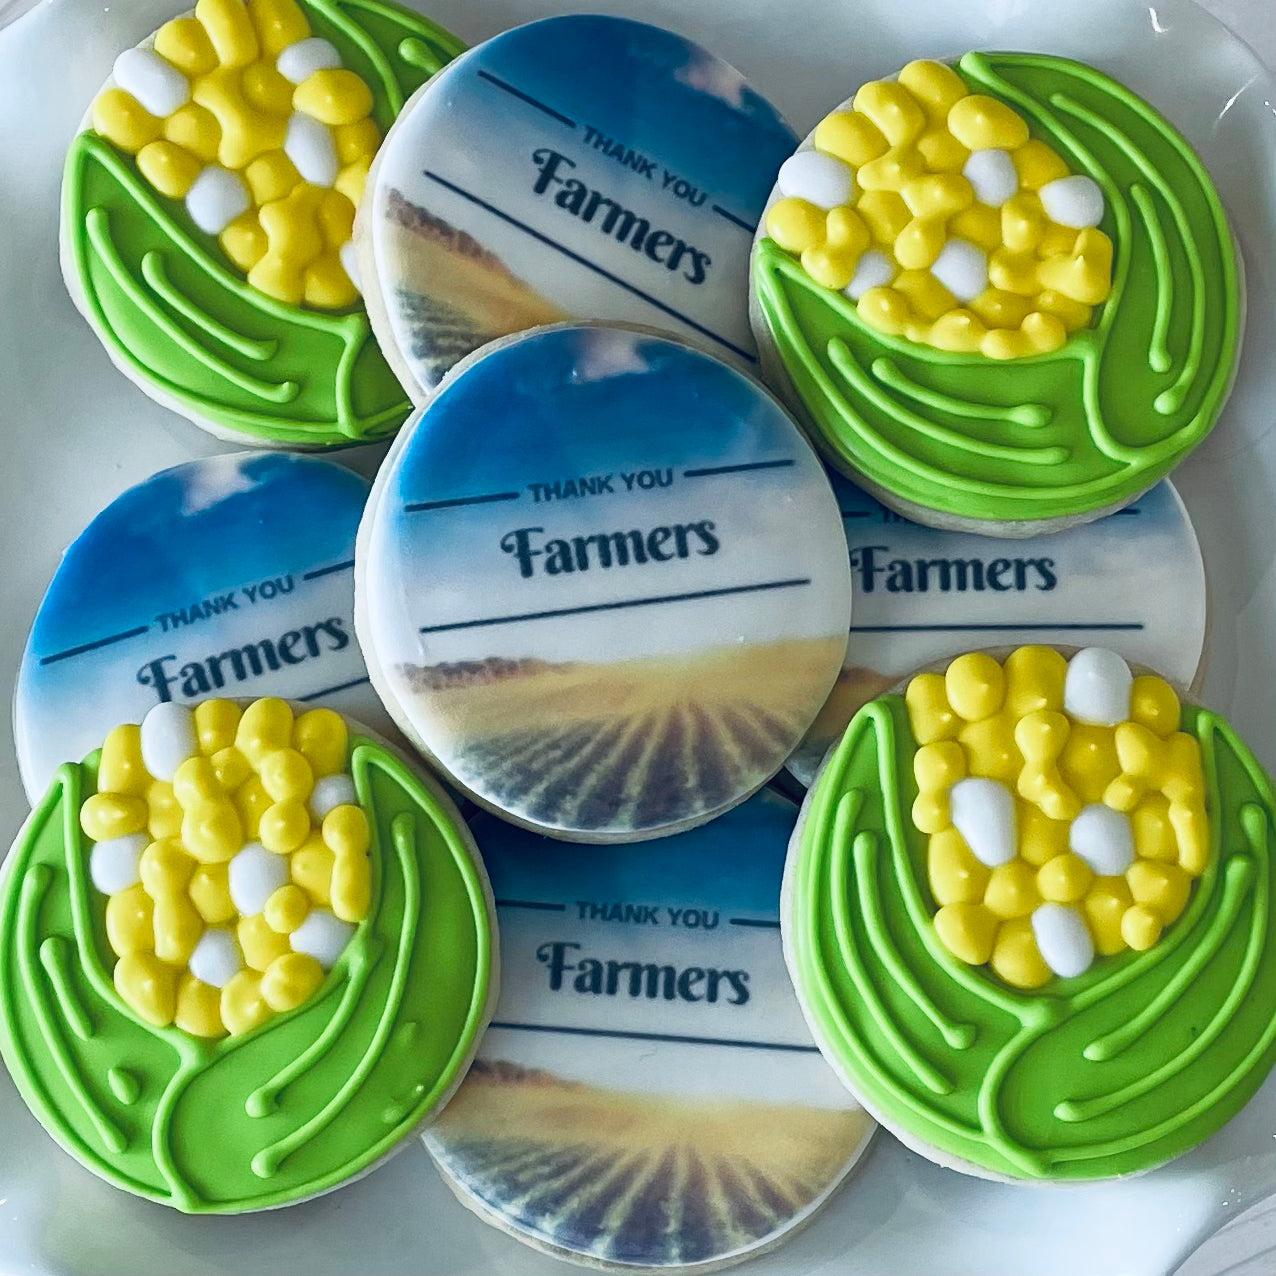 Thank you Farmers / Corn